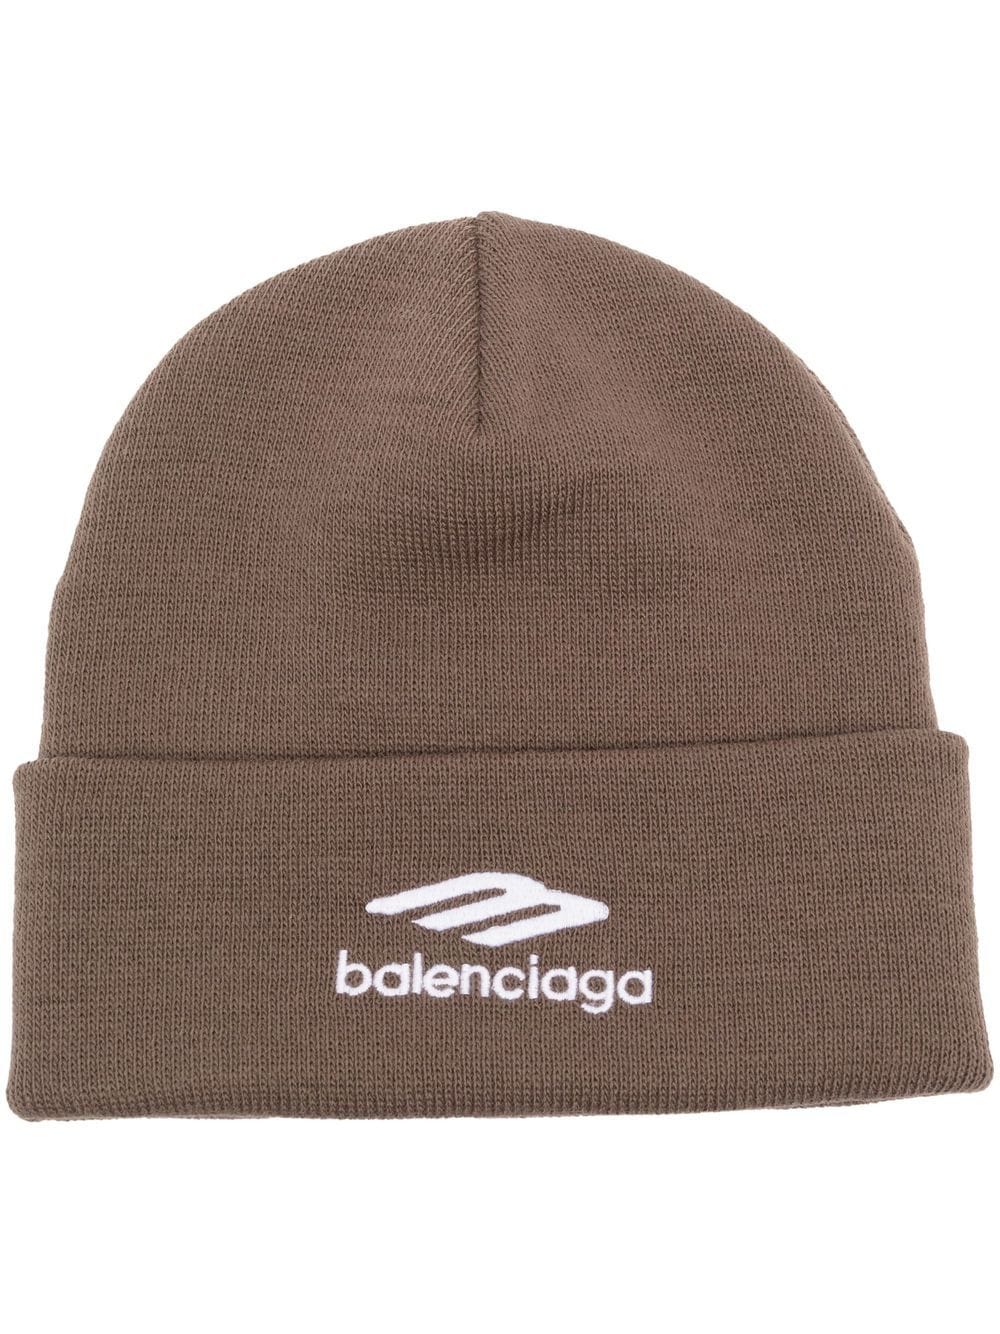 Balenciaga Logo刺绣运动标志套头帽 In Tobacco,white